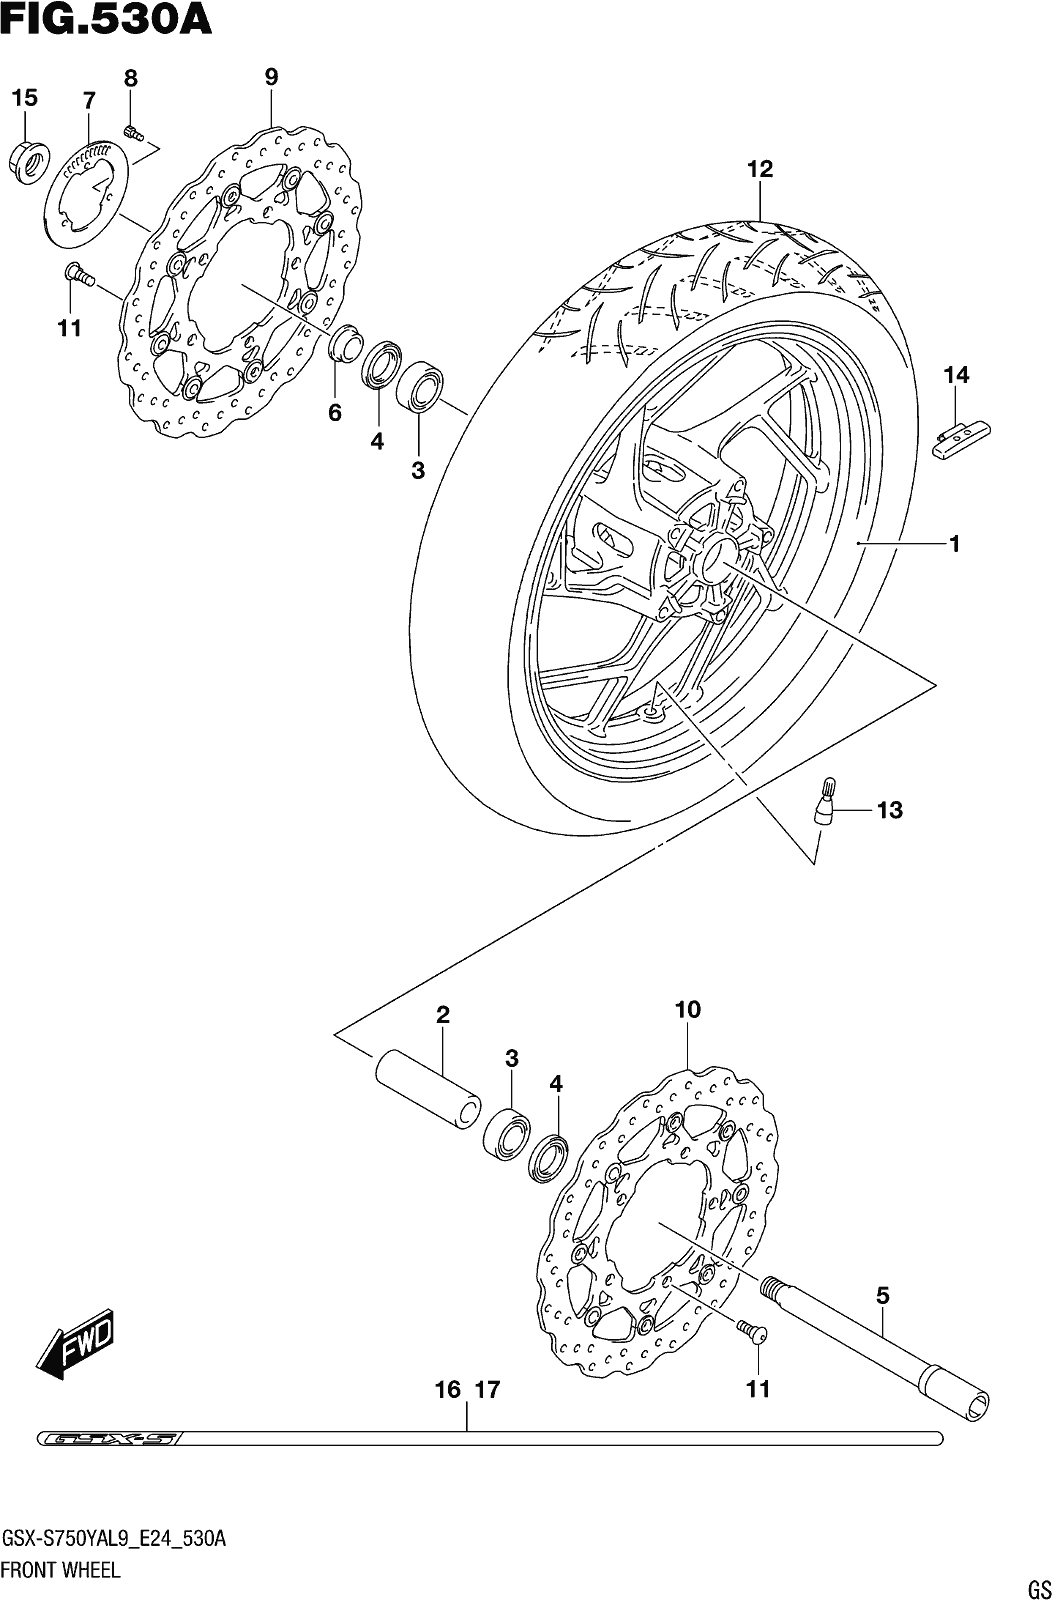 Fig.530a Front Wheel (gsx-s750yal9 E24)